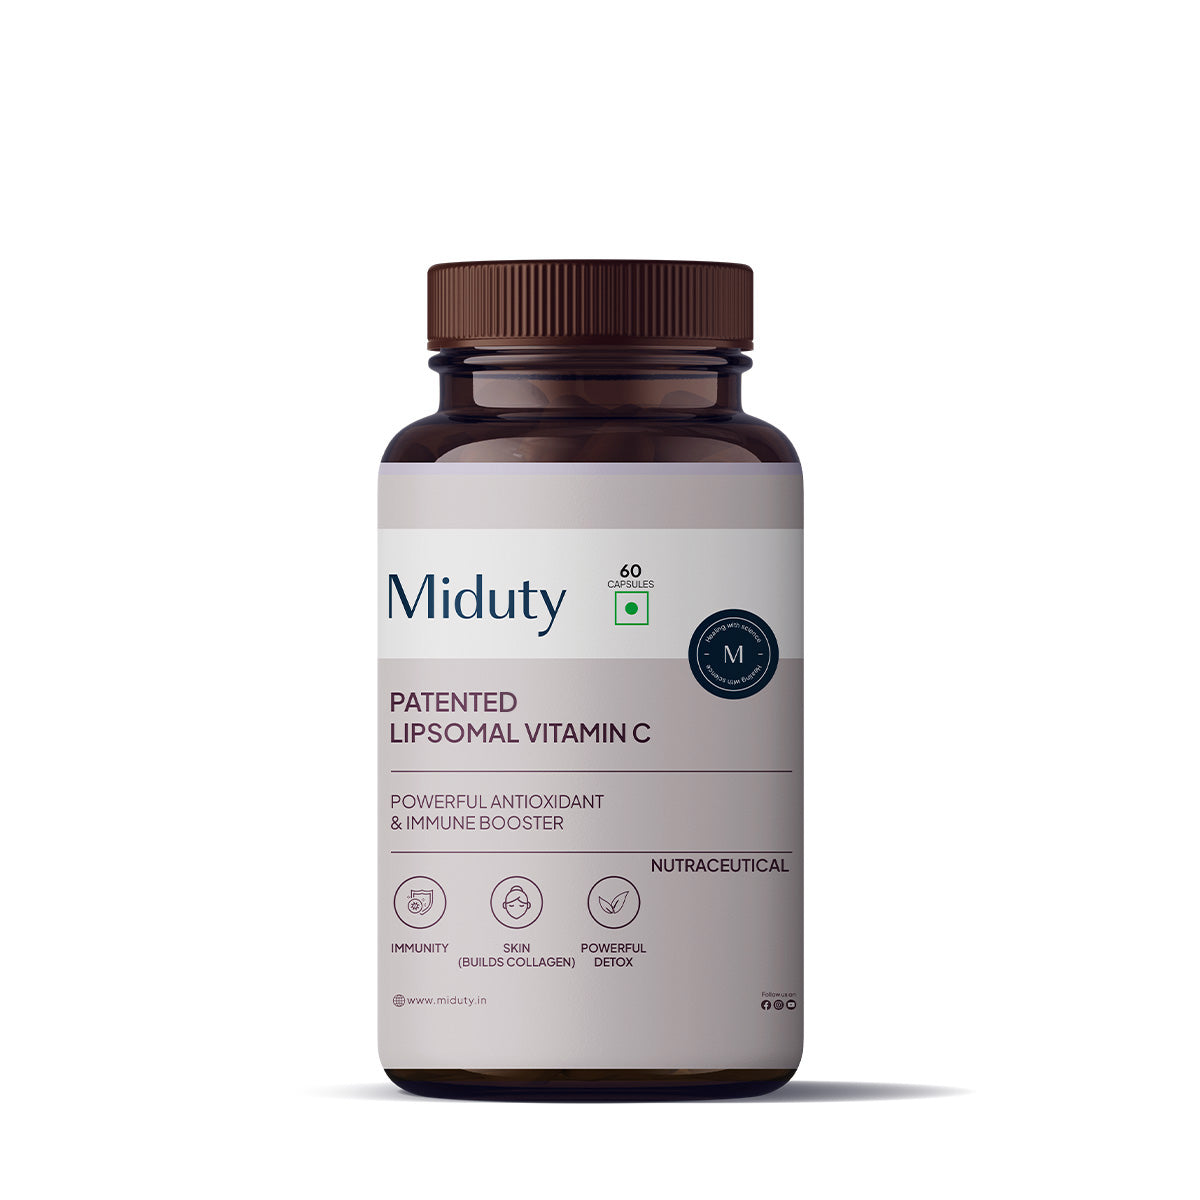 Miduty by Palak Notes Patented Liposomal Vitamin C Capsules - usa canada australia